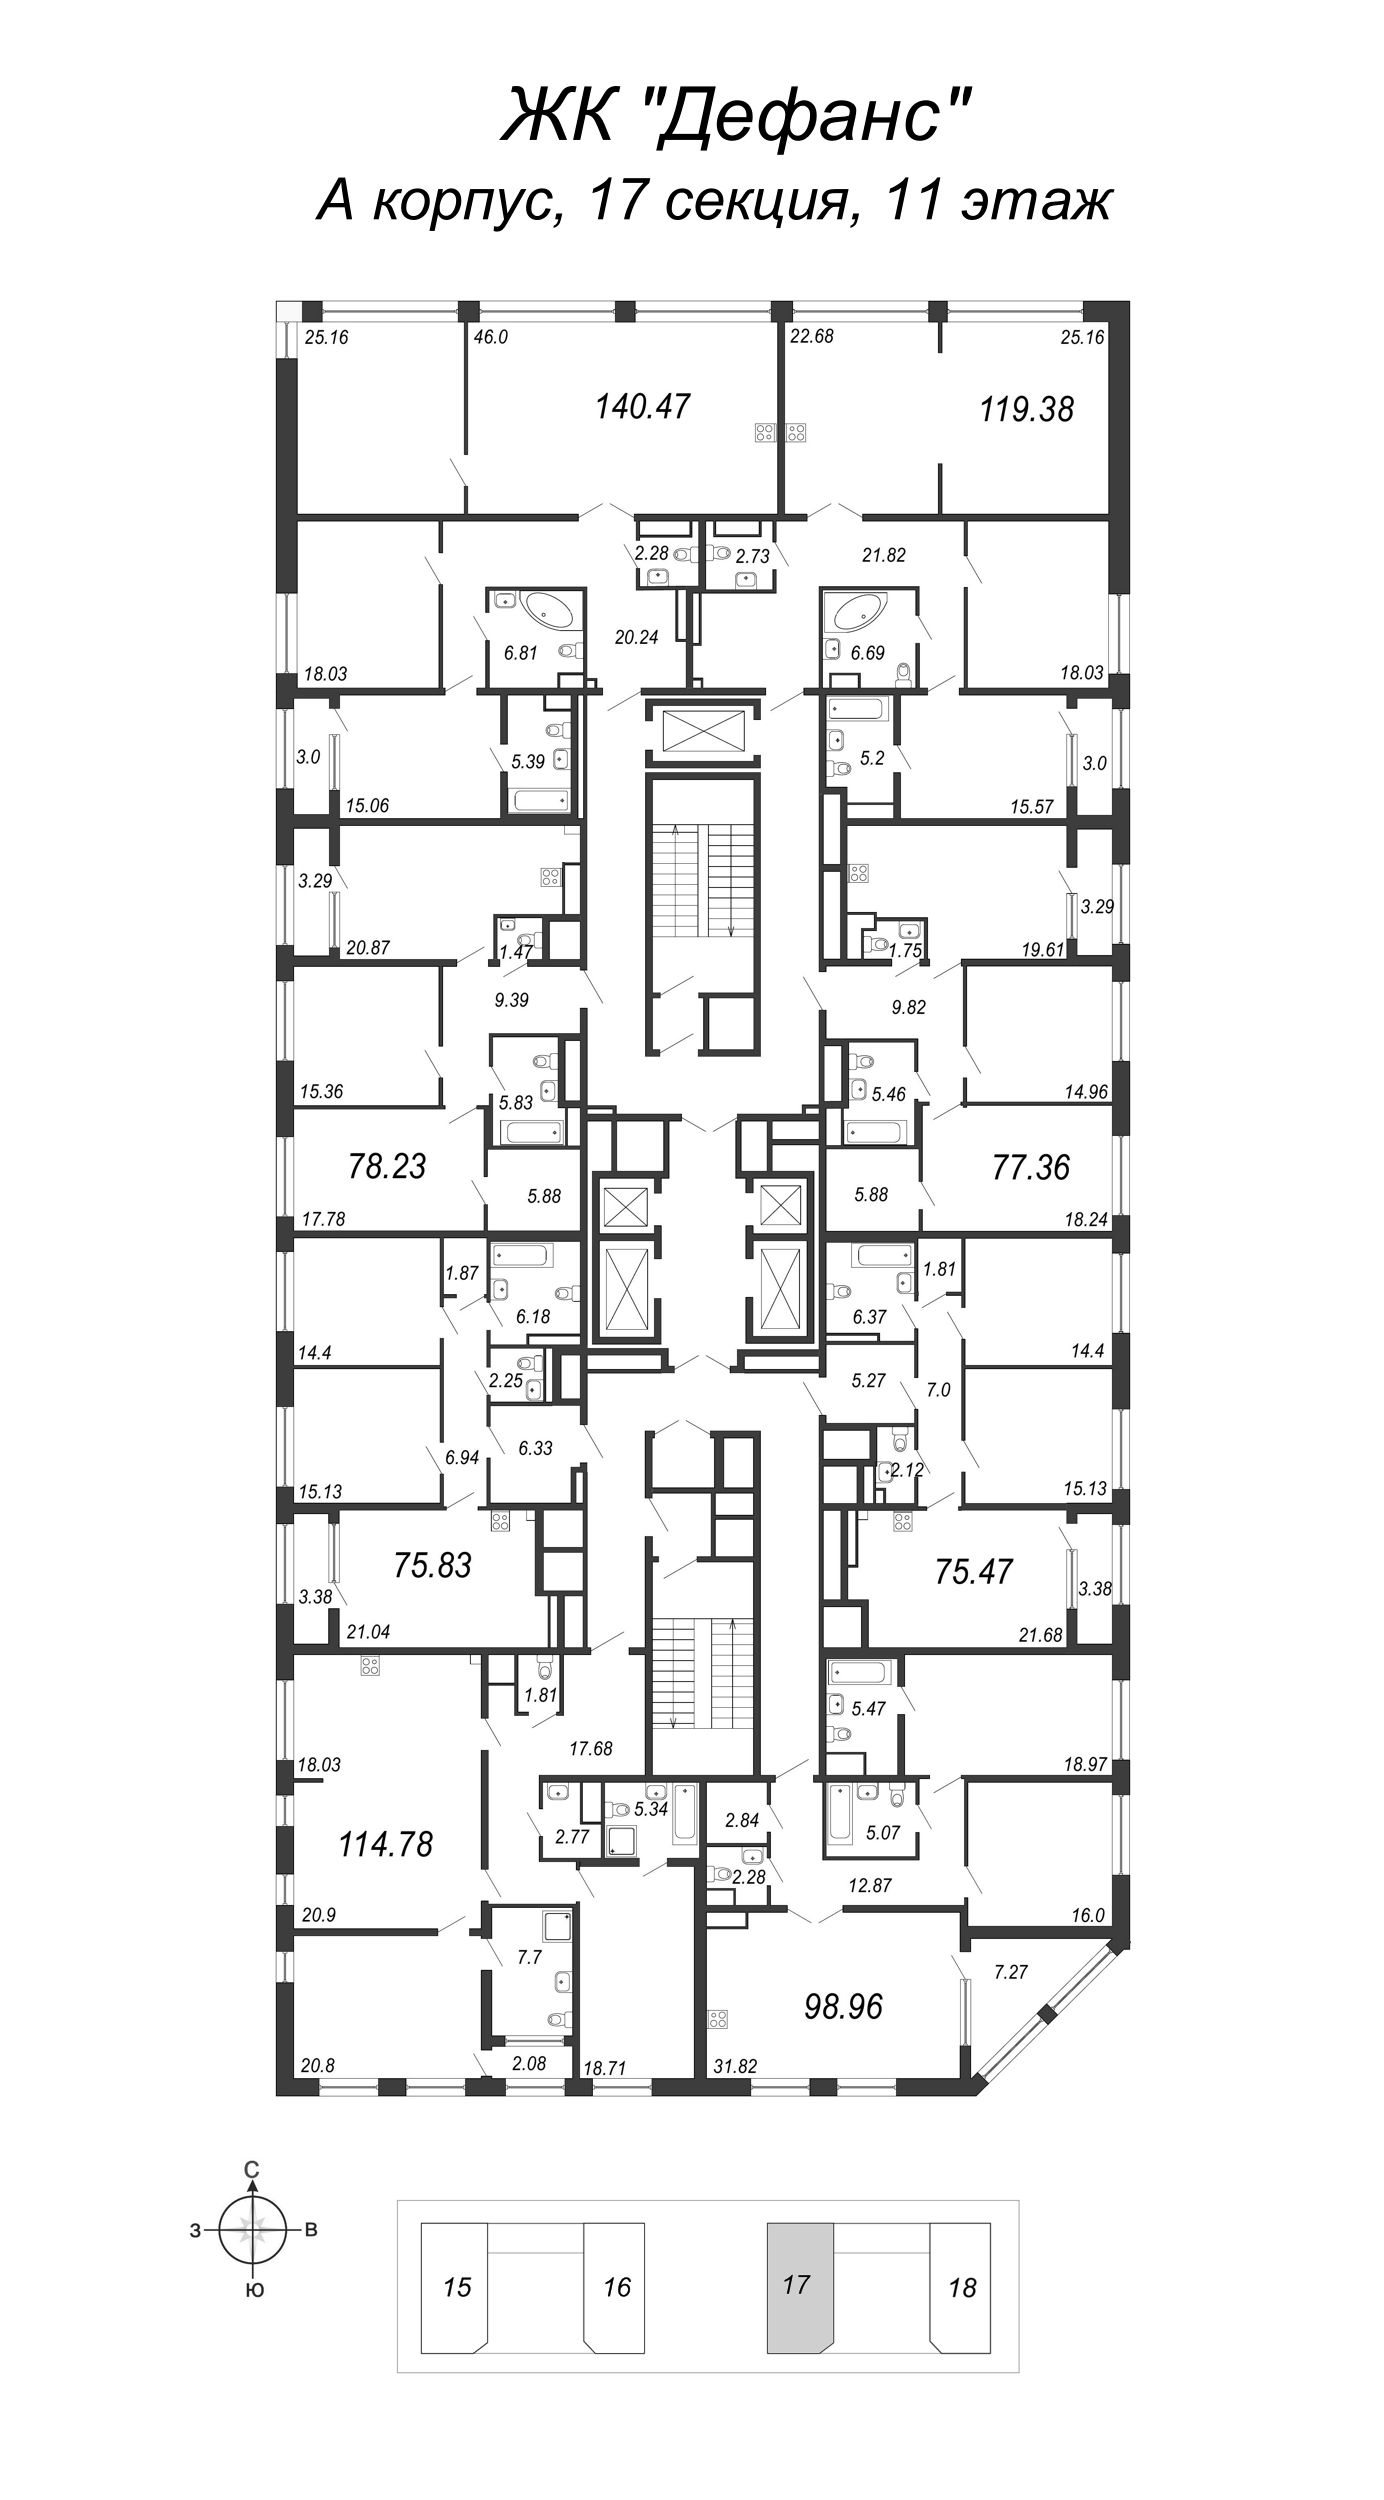 3-комнатная (Евро) квартира, 75.47 м² - планировка этажа